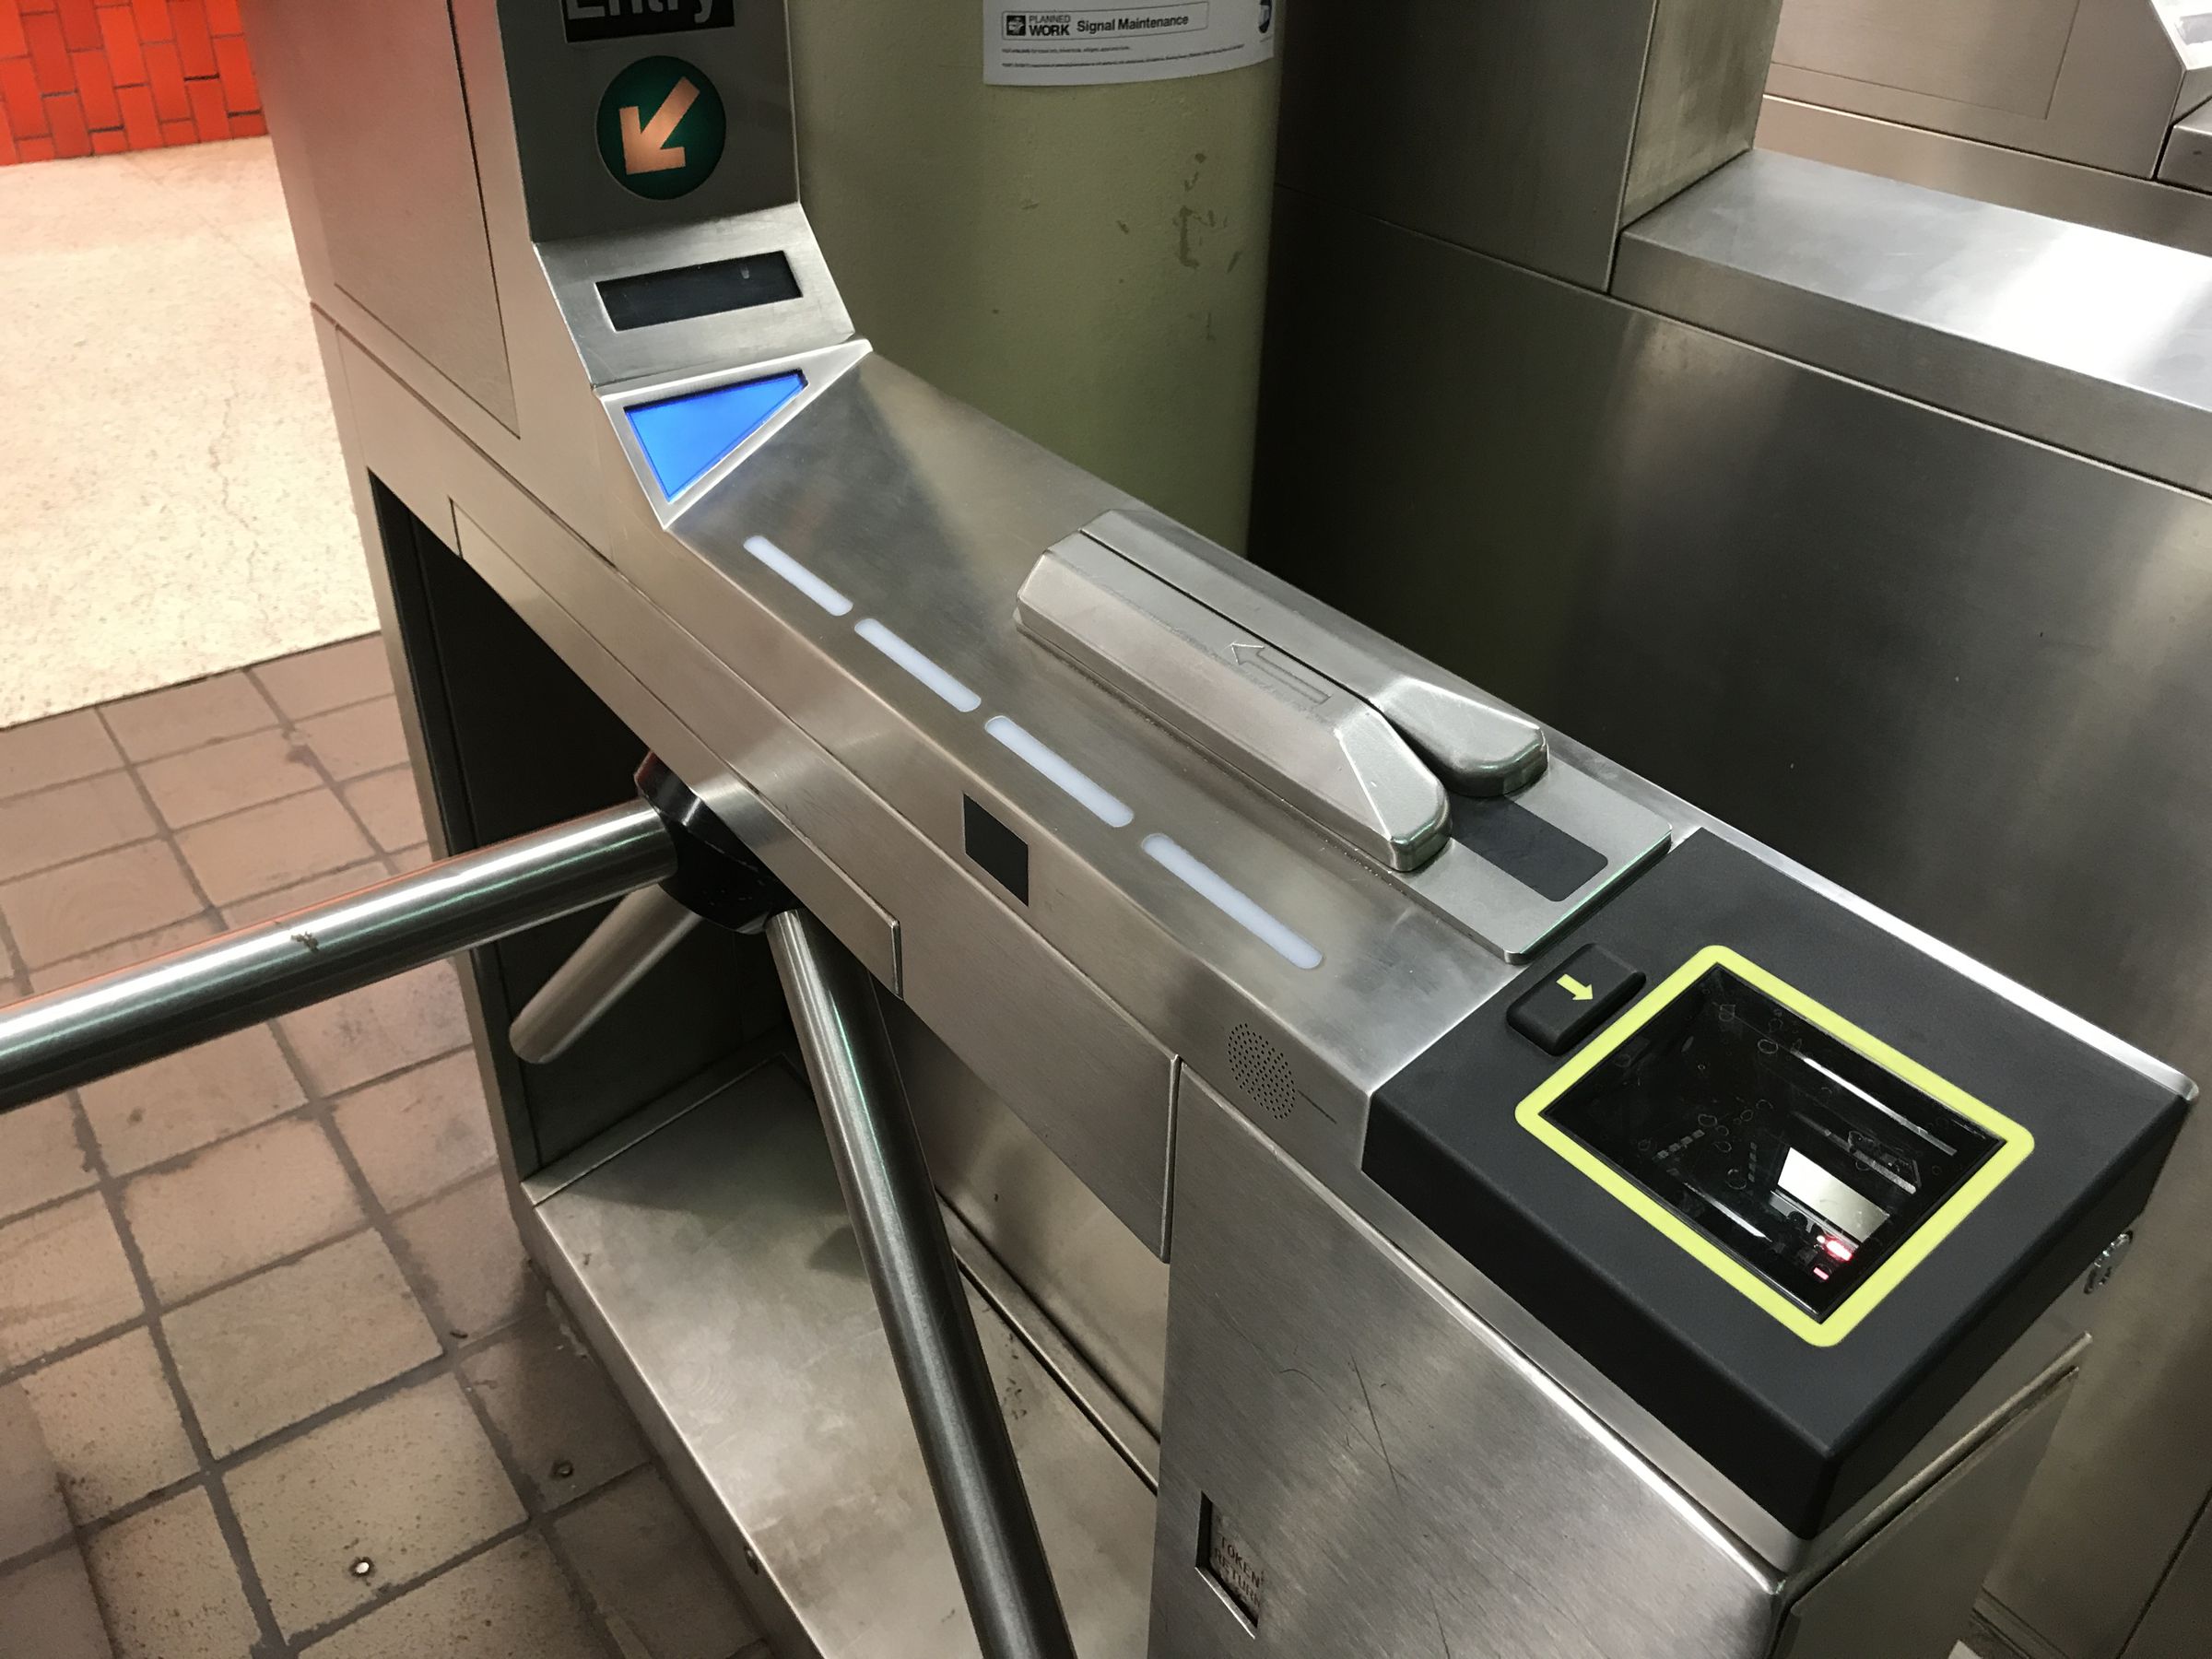 A test-e-reader at the Bowling Green subway station.